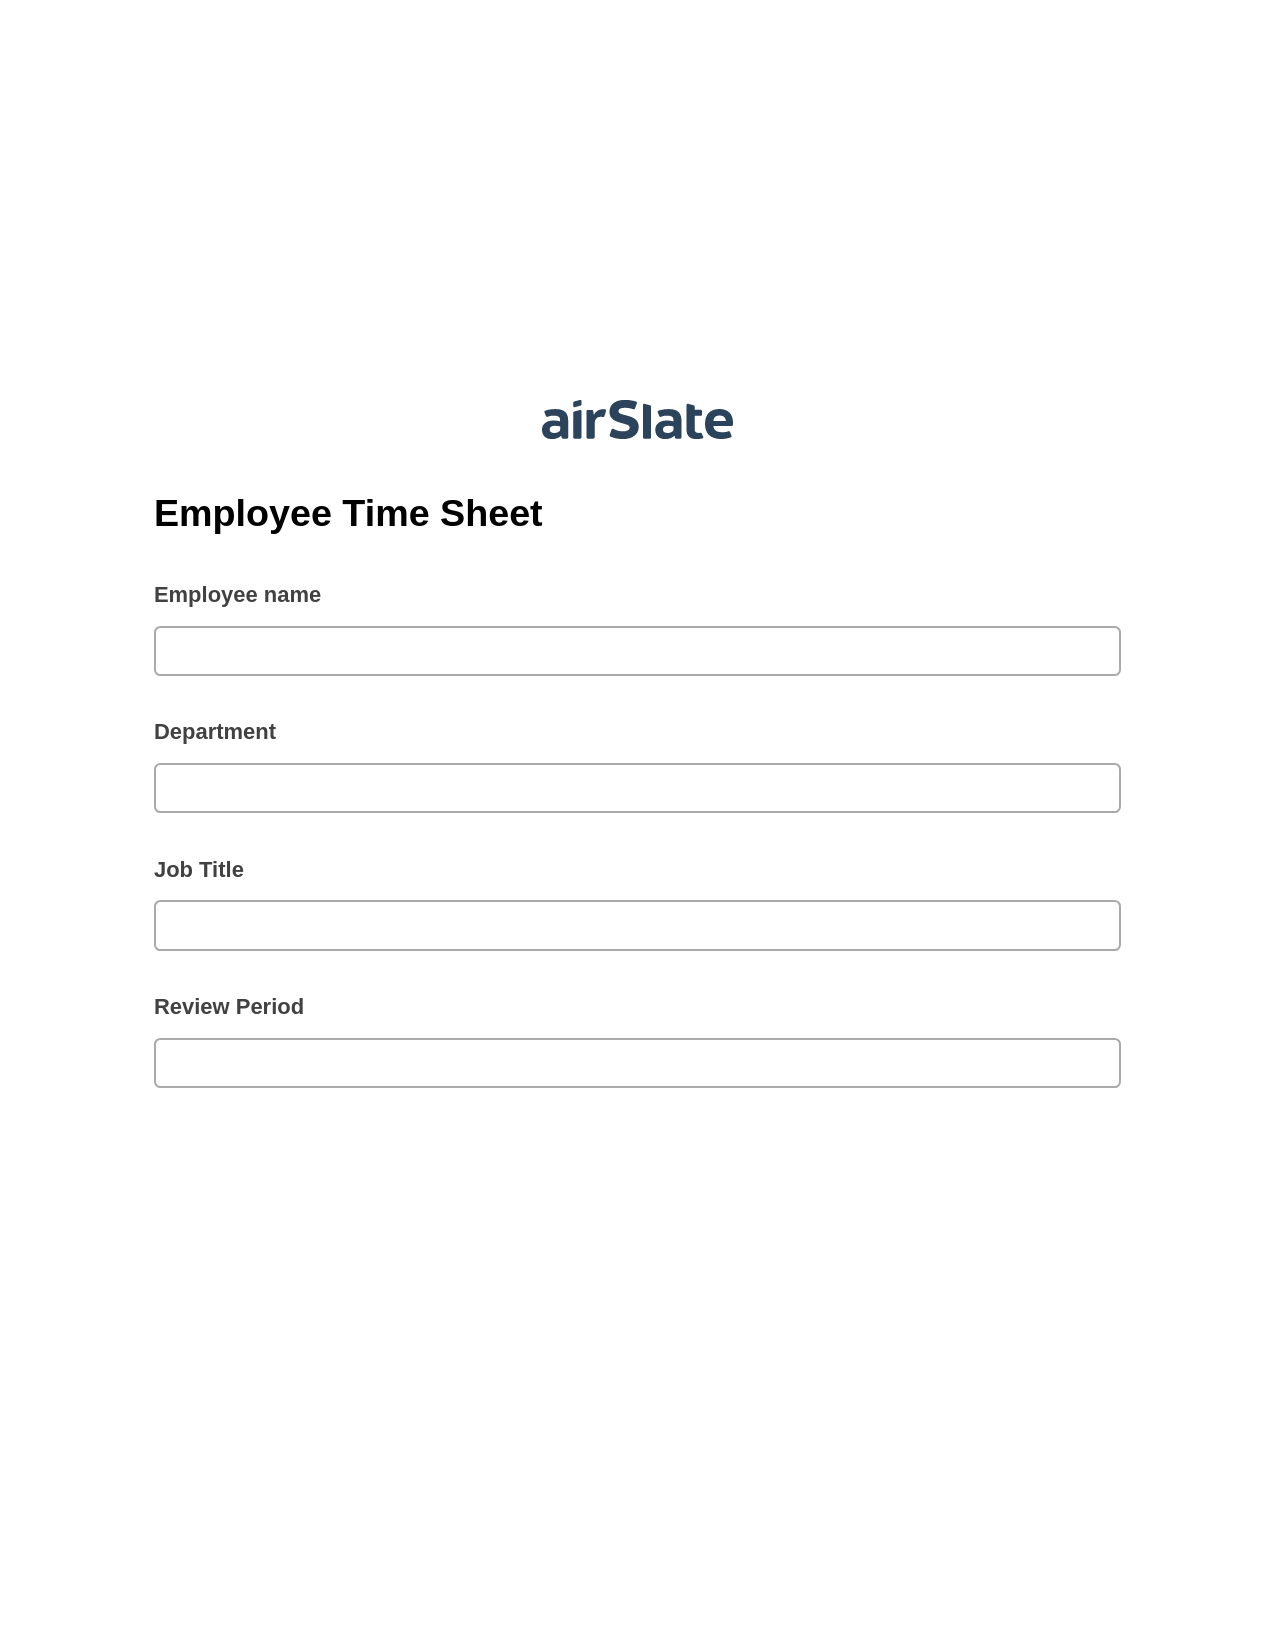 Multirole Employee Time Sheet System Bot - Slack Two-Way Binding Bot, Create slate addon, Export to NetSuite Bot